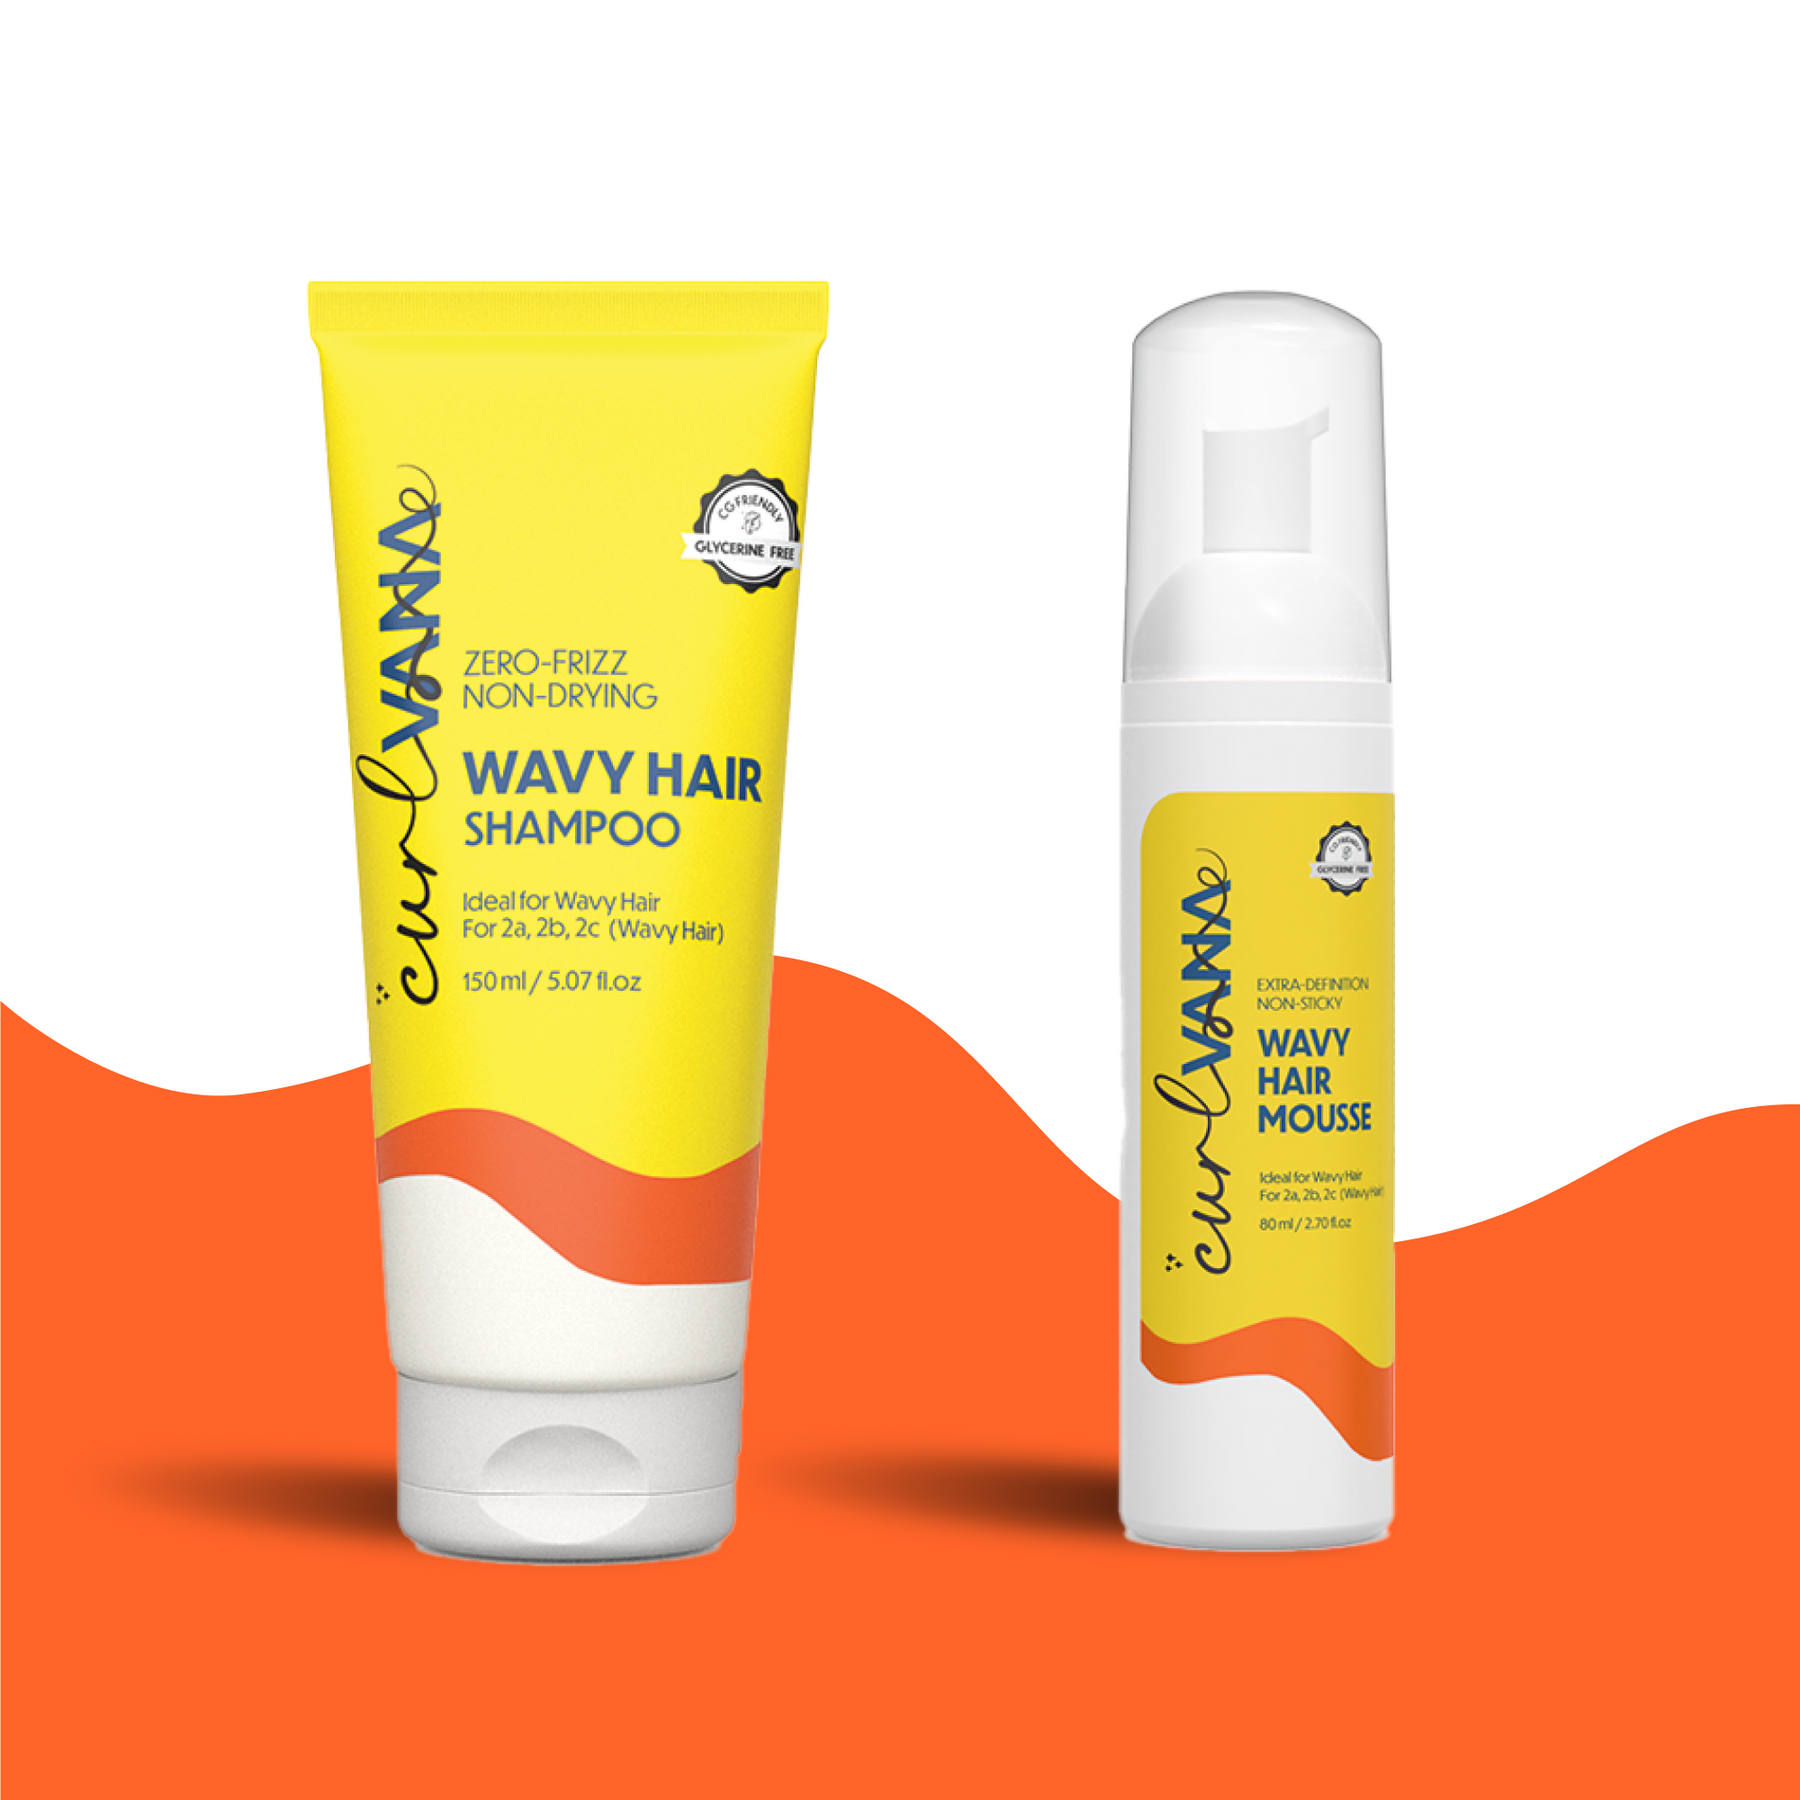 Curlvana Wavy Hair Care Range with Shampoo (150ml) & Mousse (80ml)